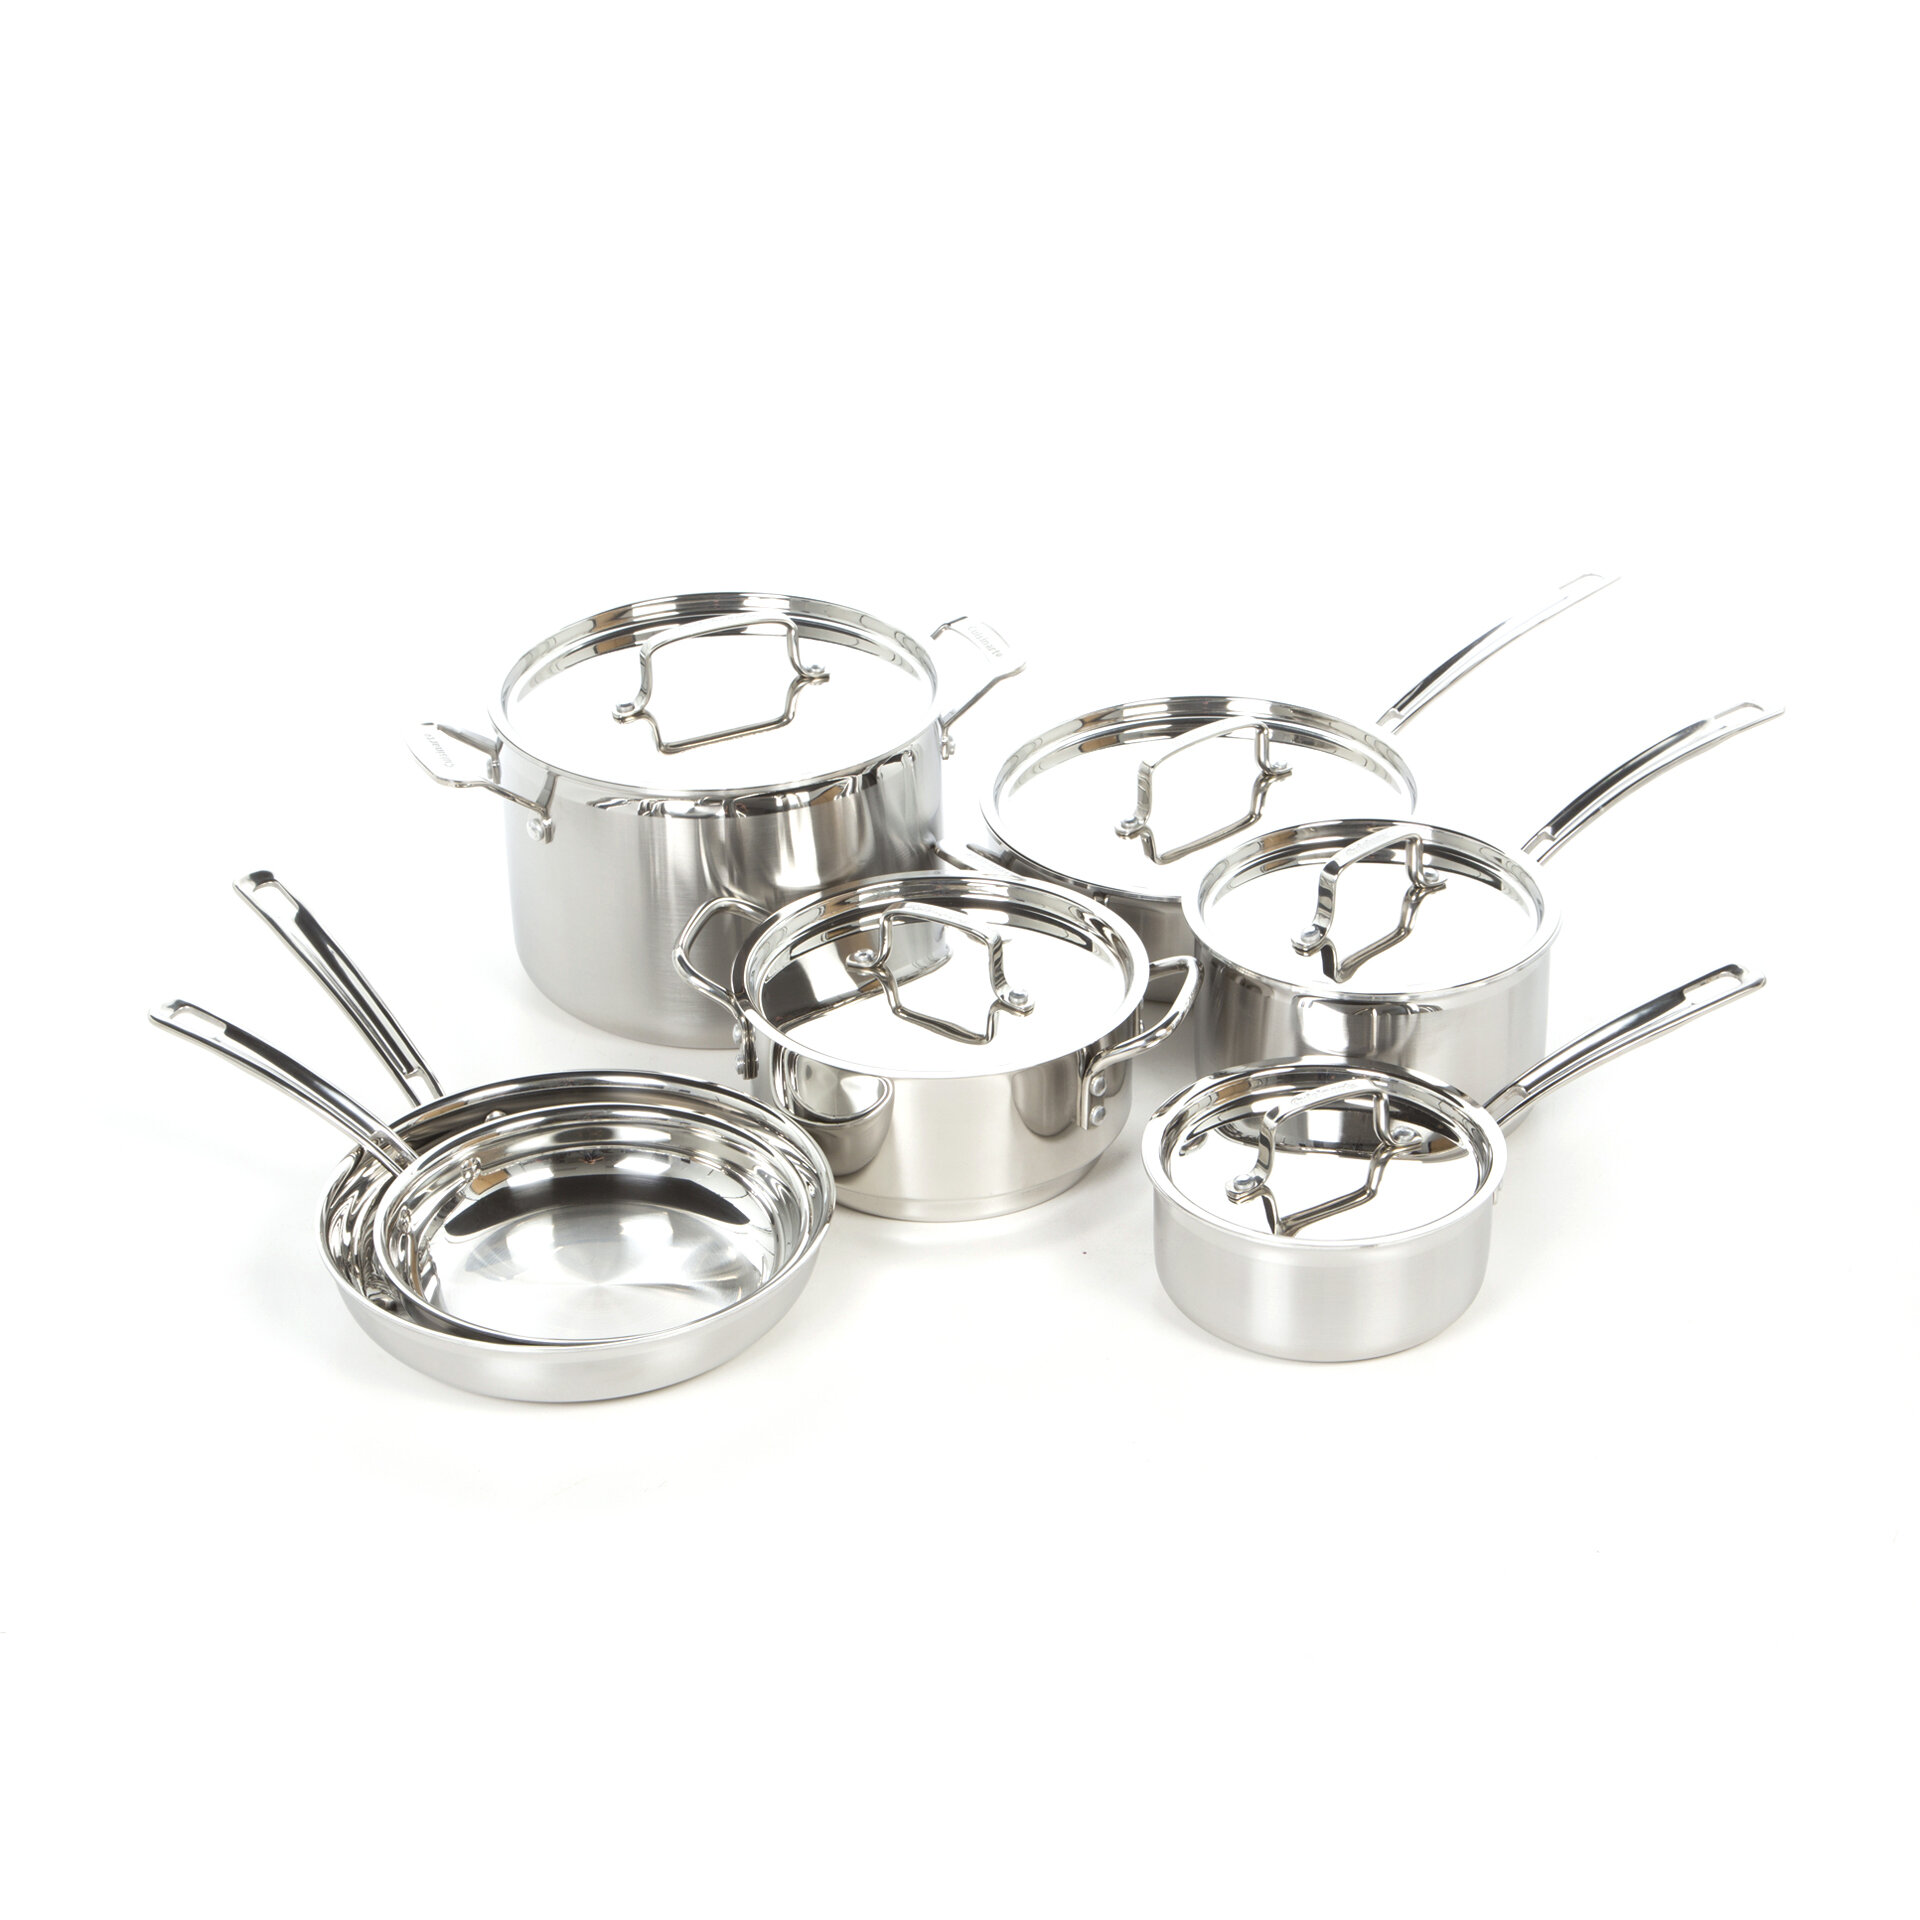 Cuisinart Multi Clad Pro 12 Piece Stainless Steel Cookware Set